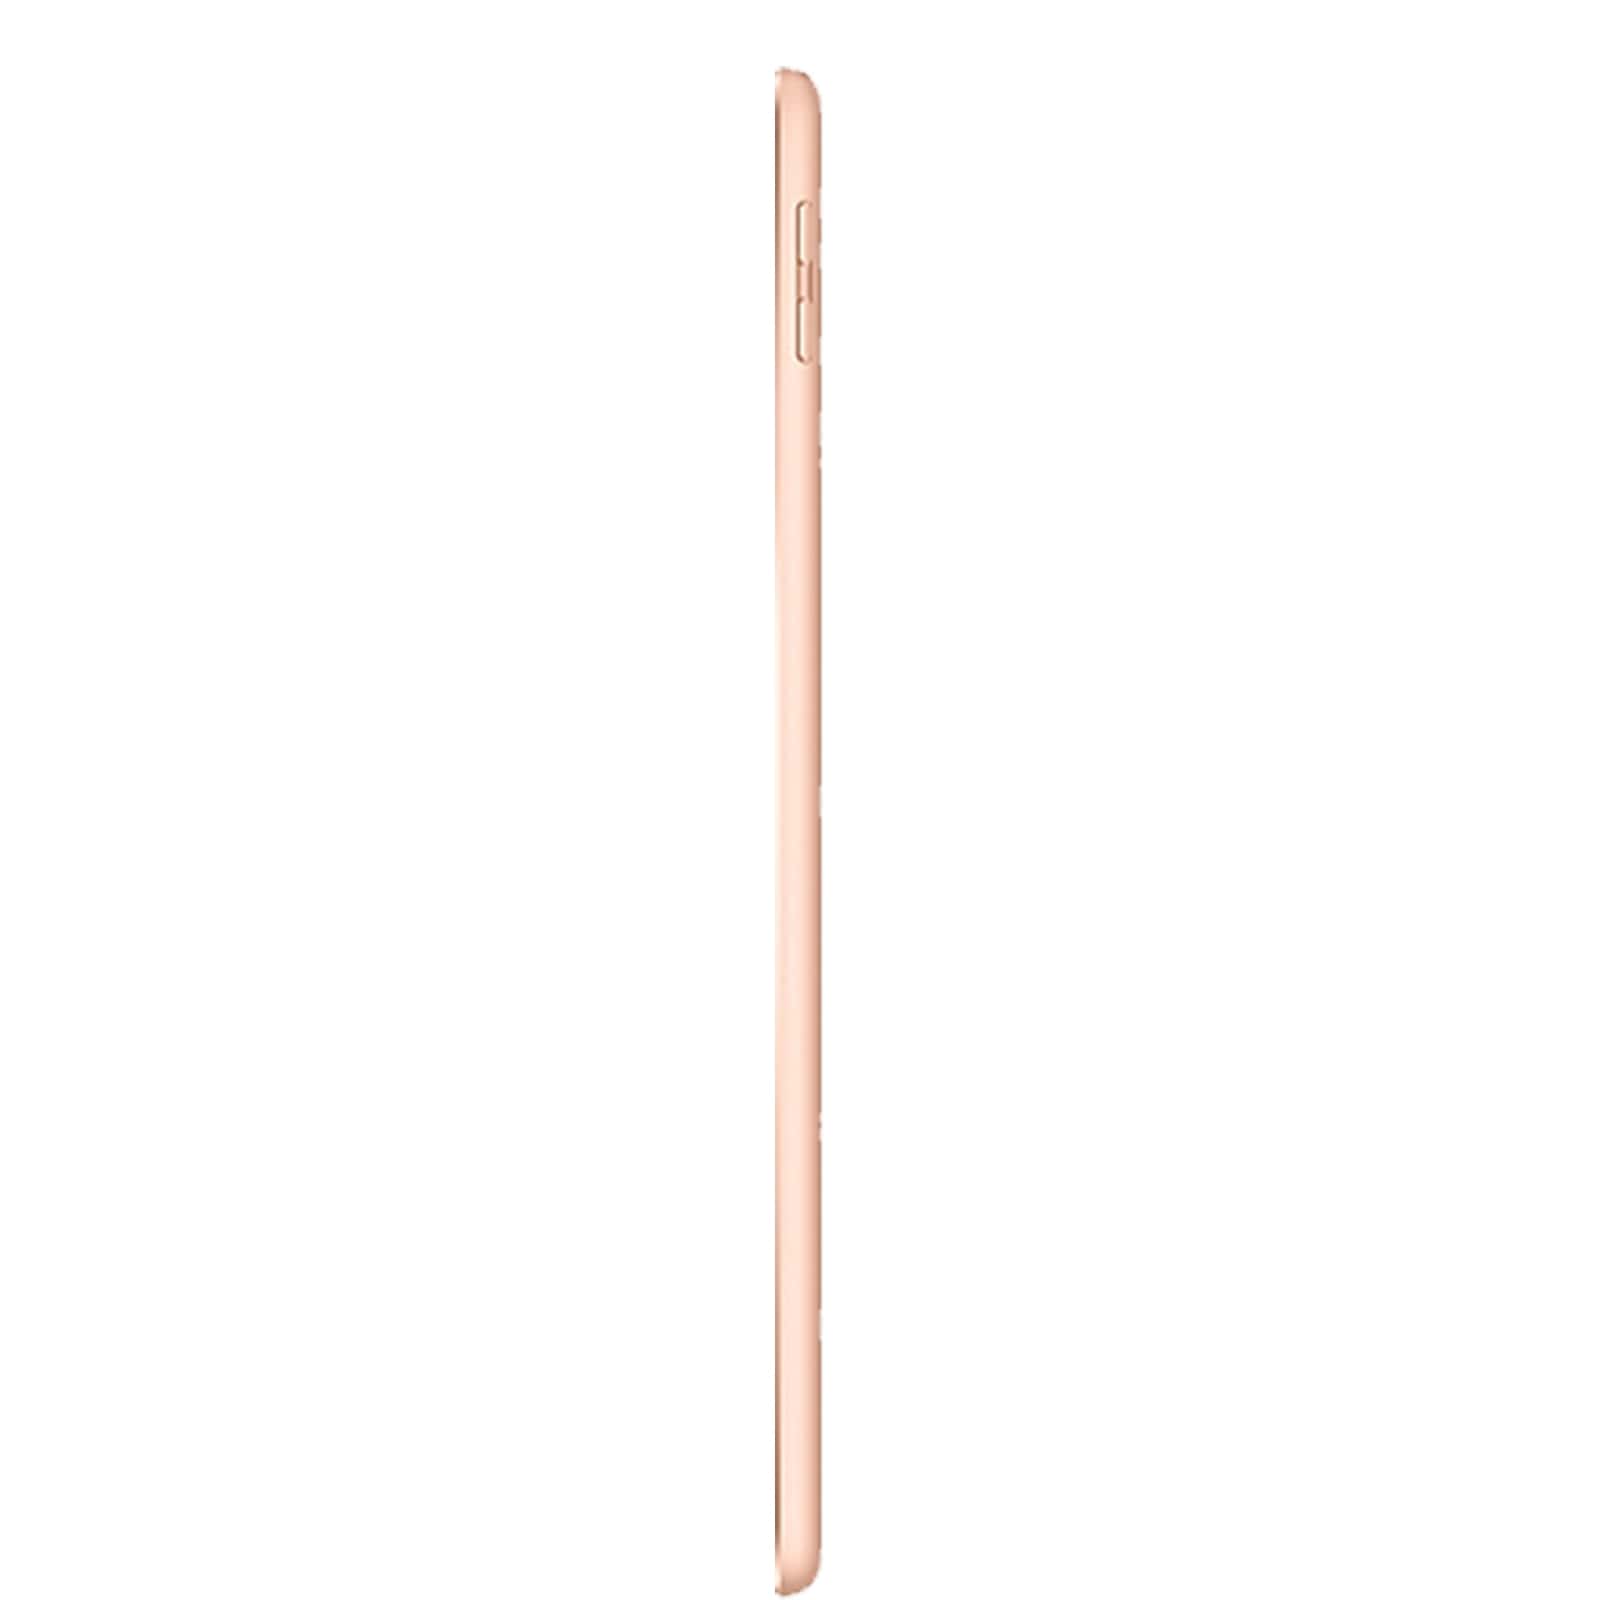 Apple iPad 6 32GB WiFi Gold - Pristine